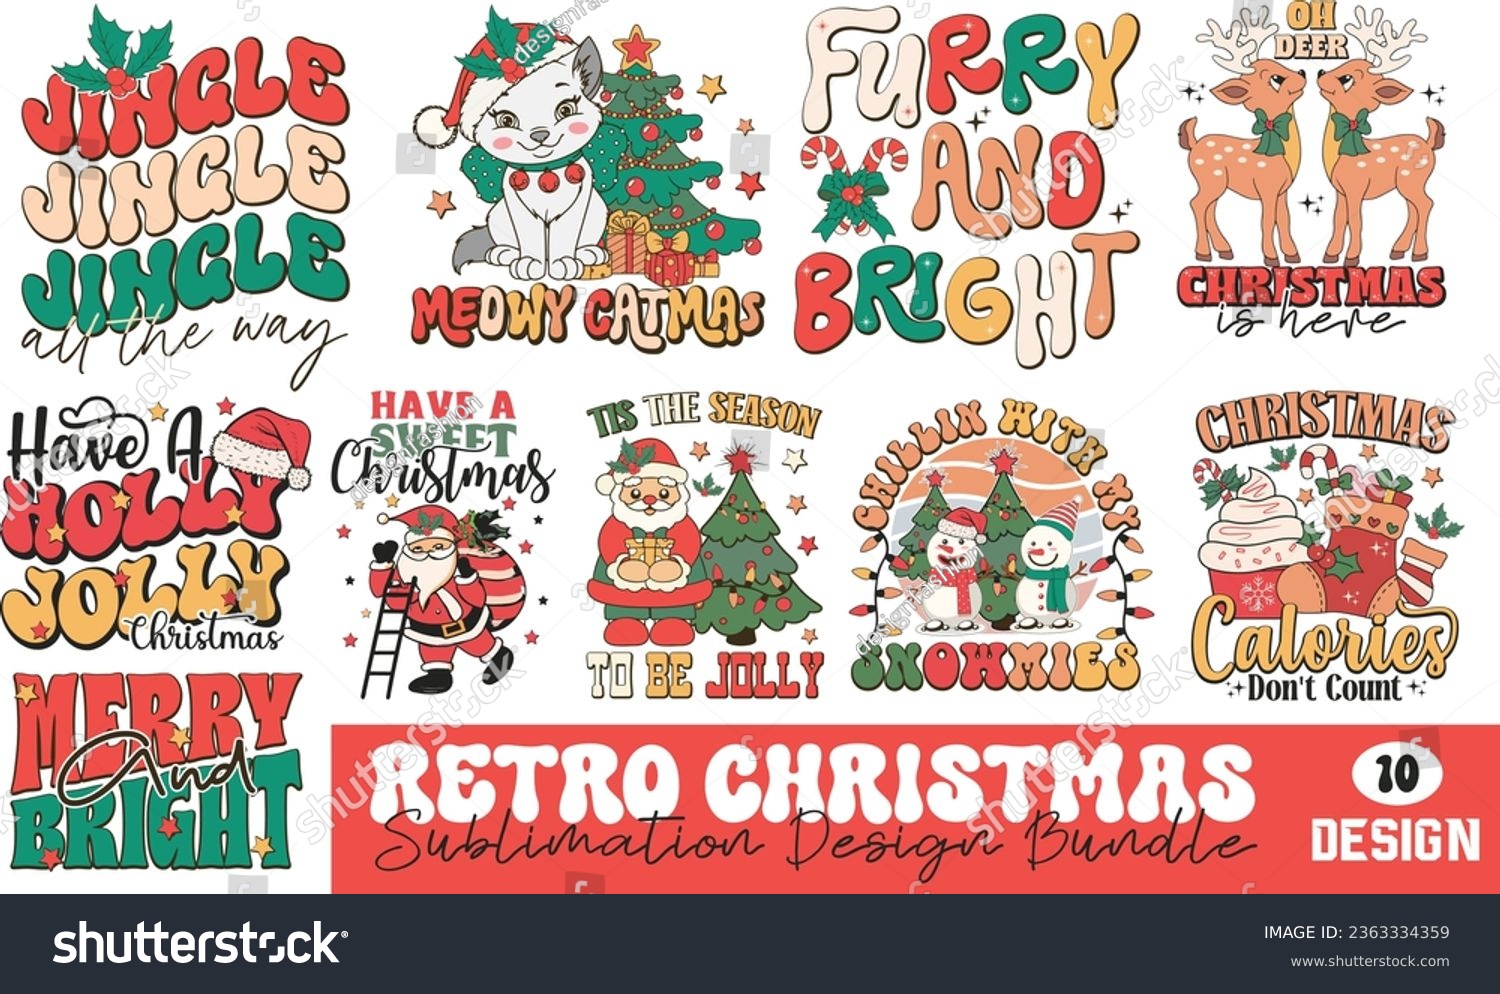 SVG of Retro Christmas  Sublimation Design Bundle svg